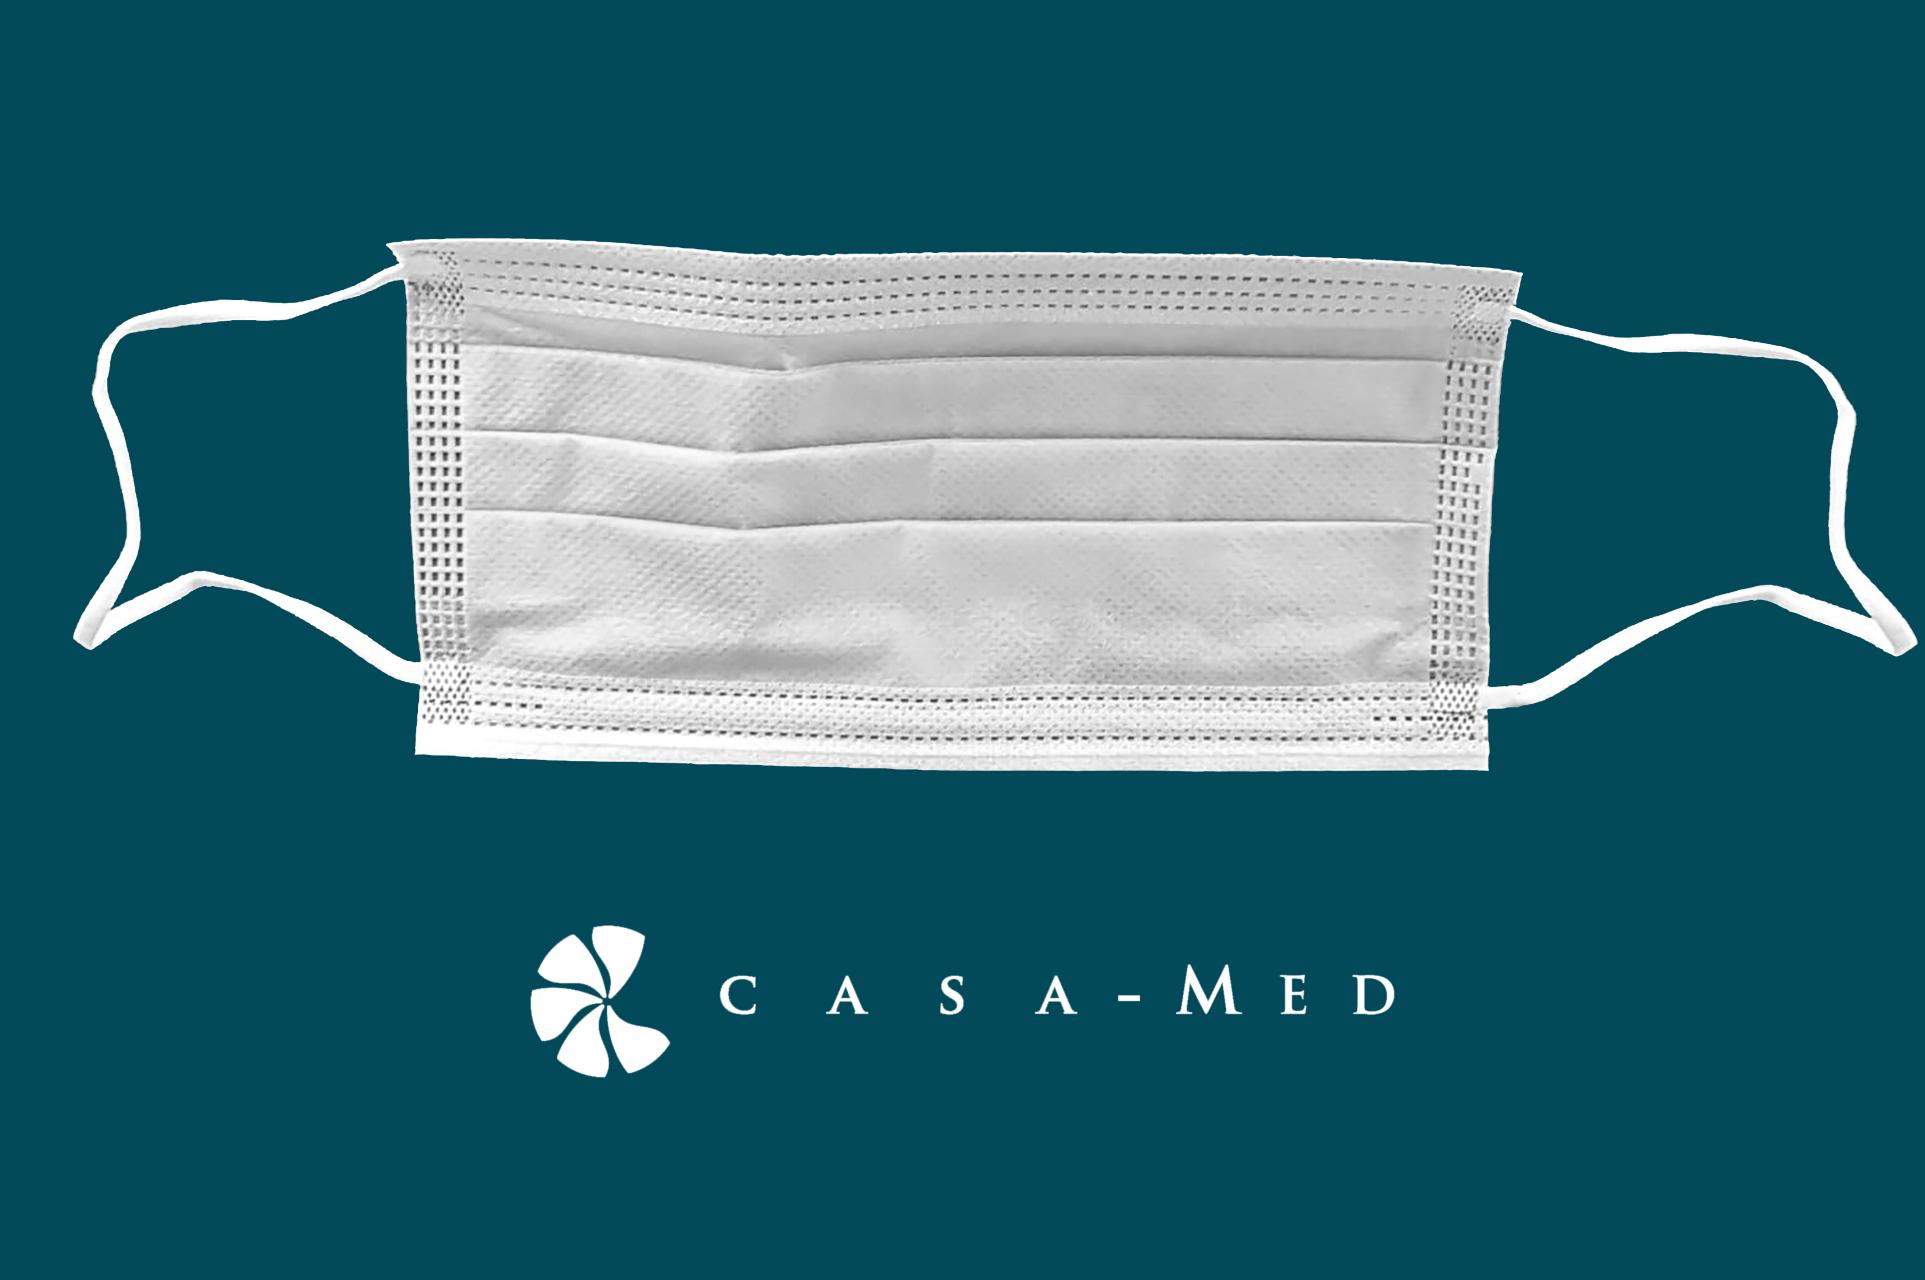 Casa-Med mascarilla quirúrgica 5 capas